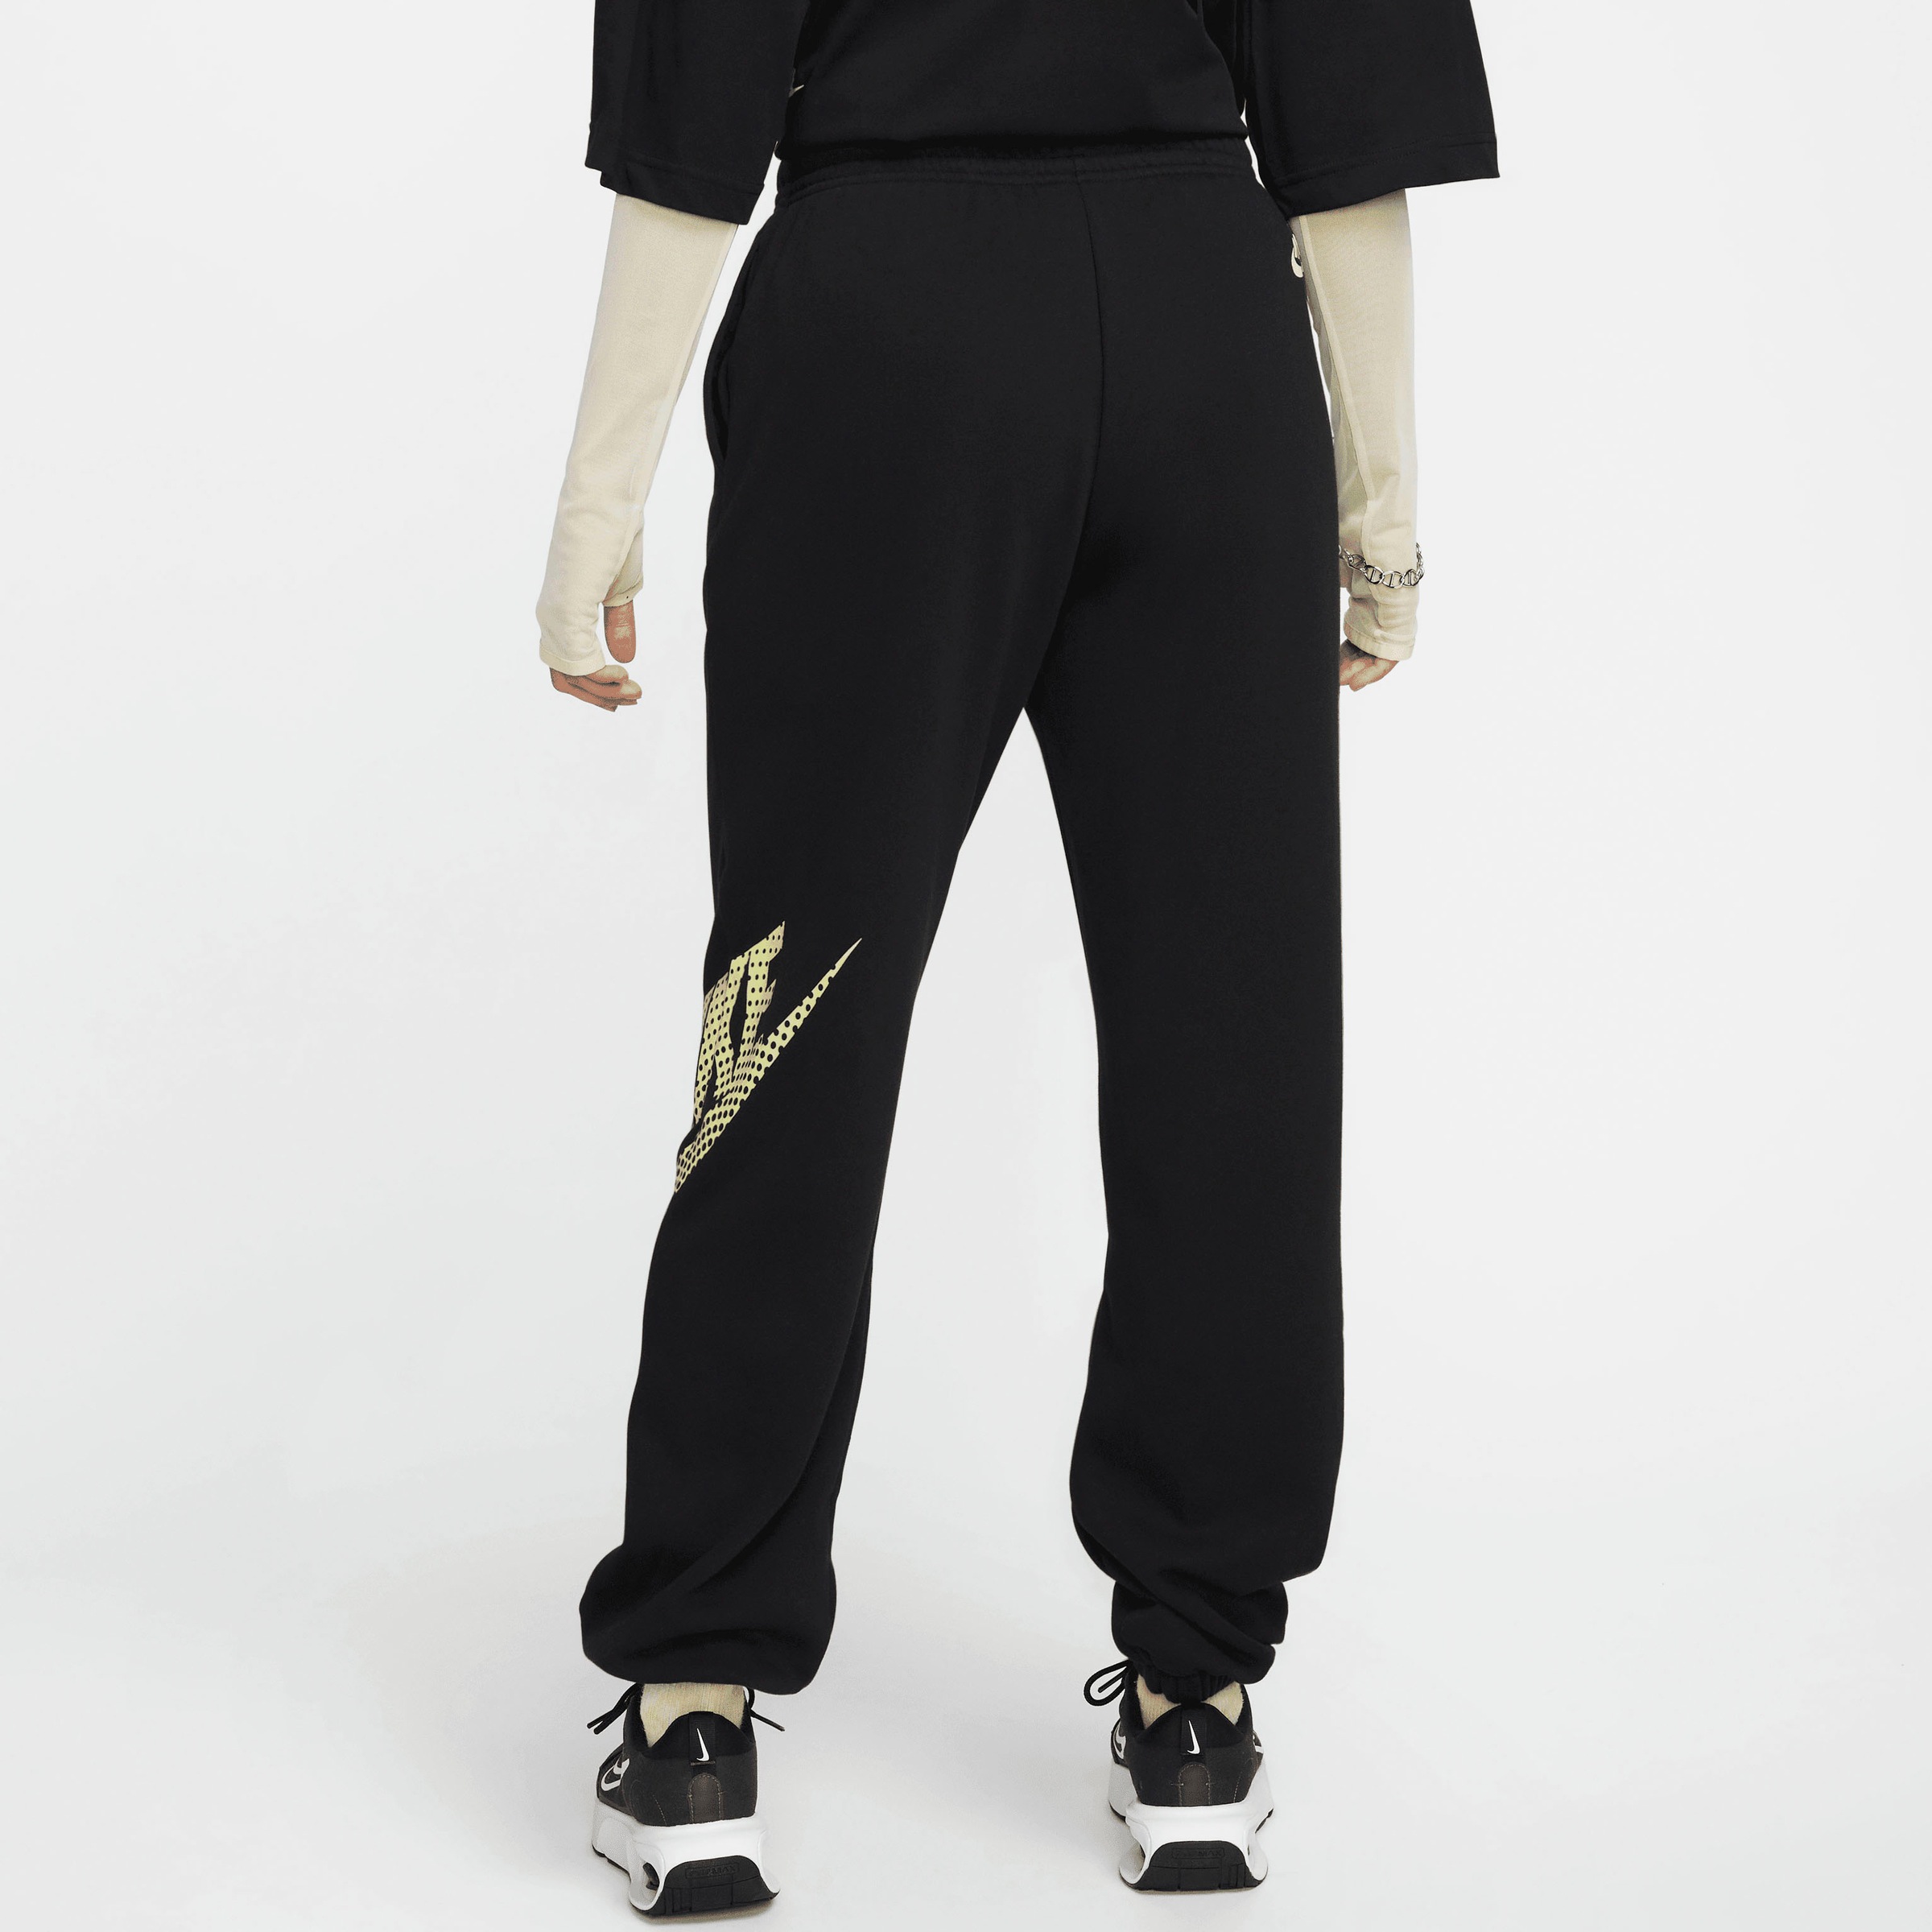 Nike Sportswear OTTO »W NSW PANT DNC« Online im Jogginghose OS kaufen Shop FLC